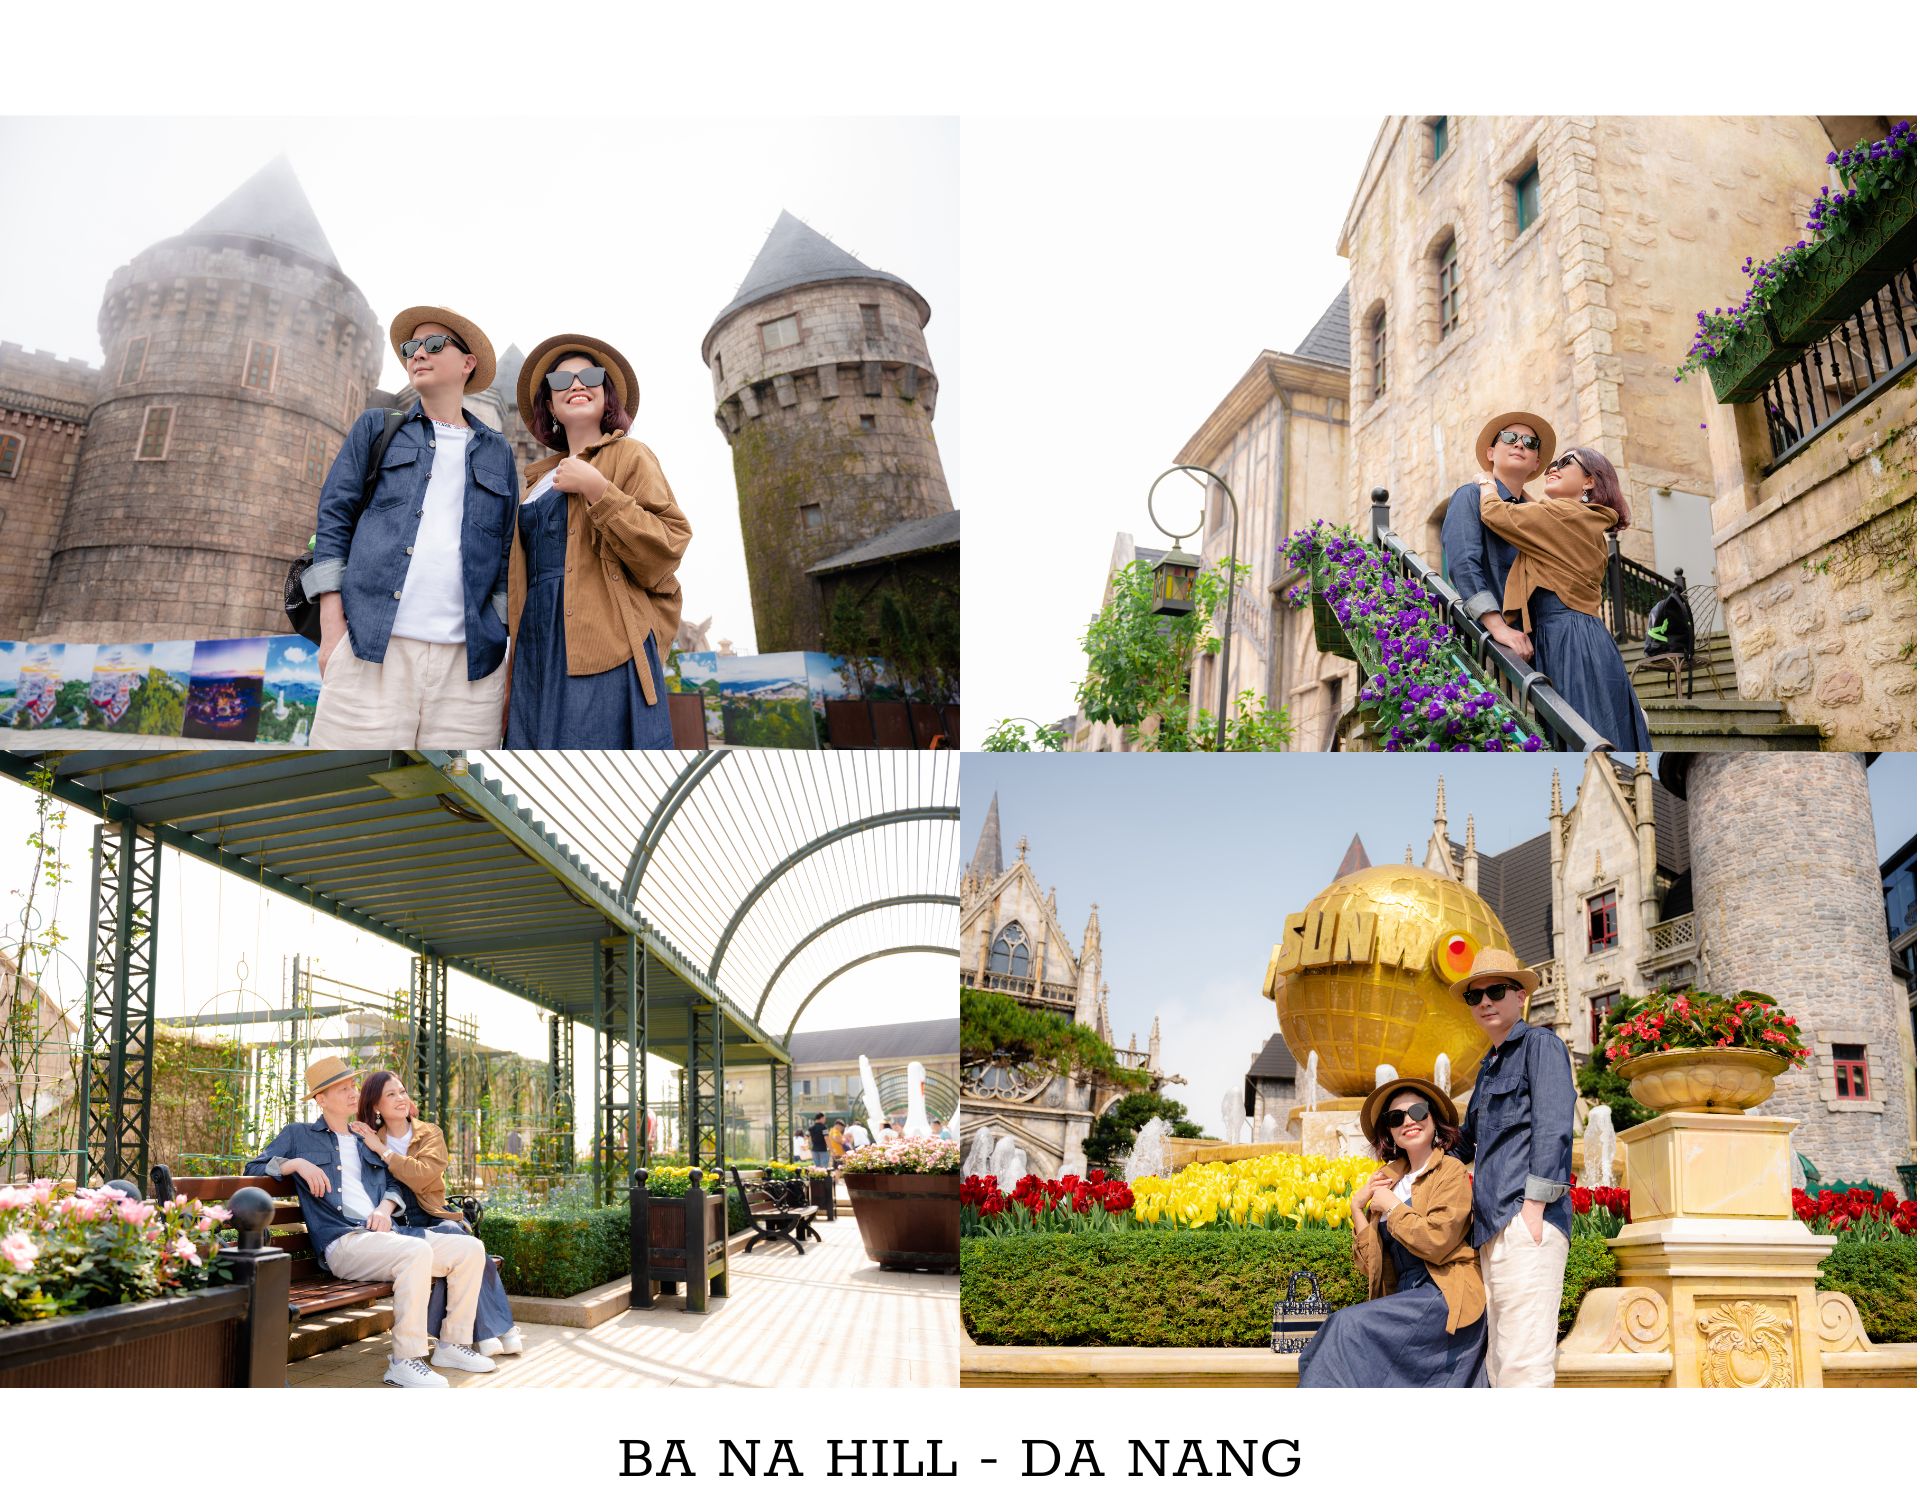 Da Nang photographer - Professional Photography Services